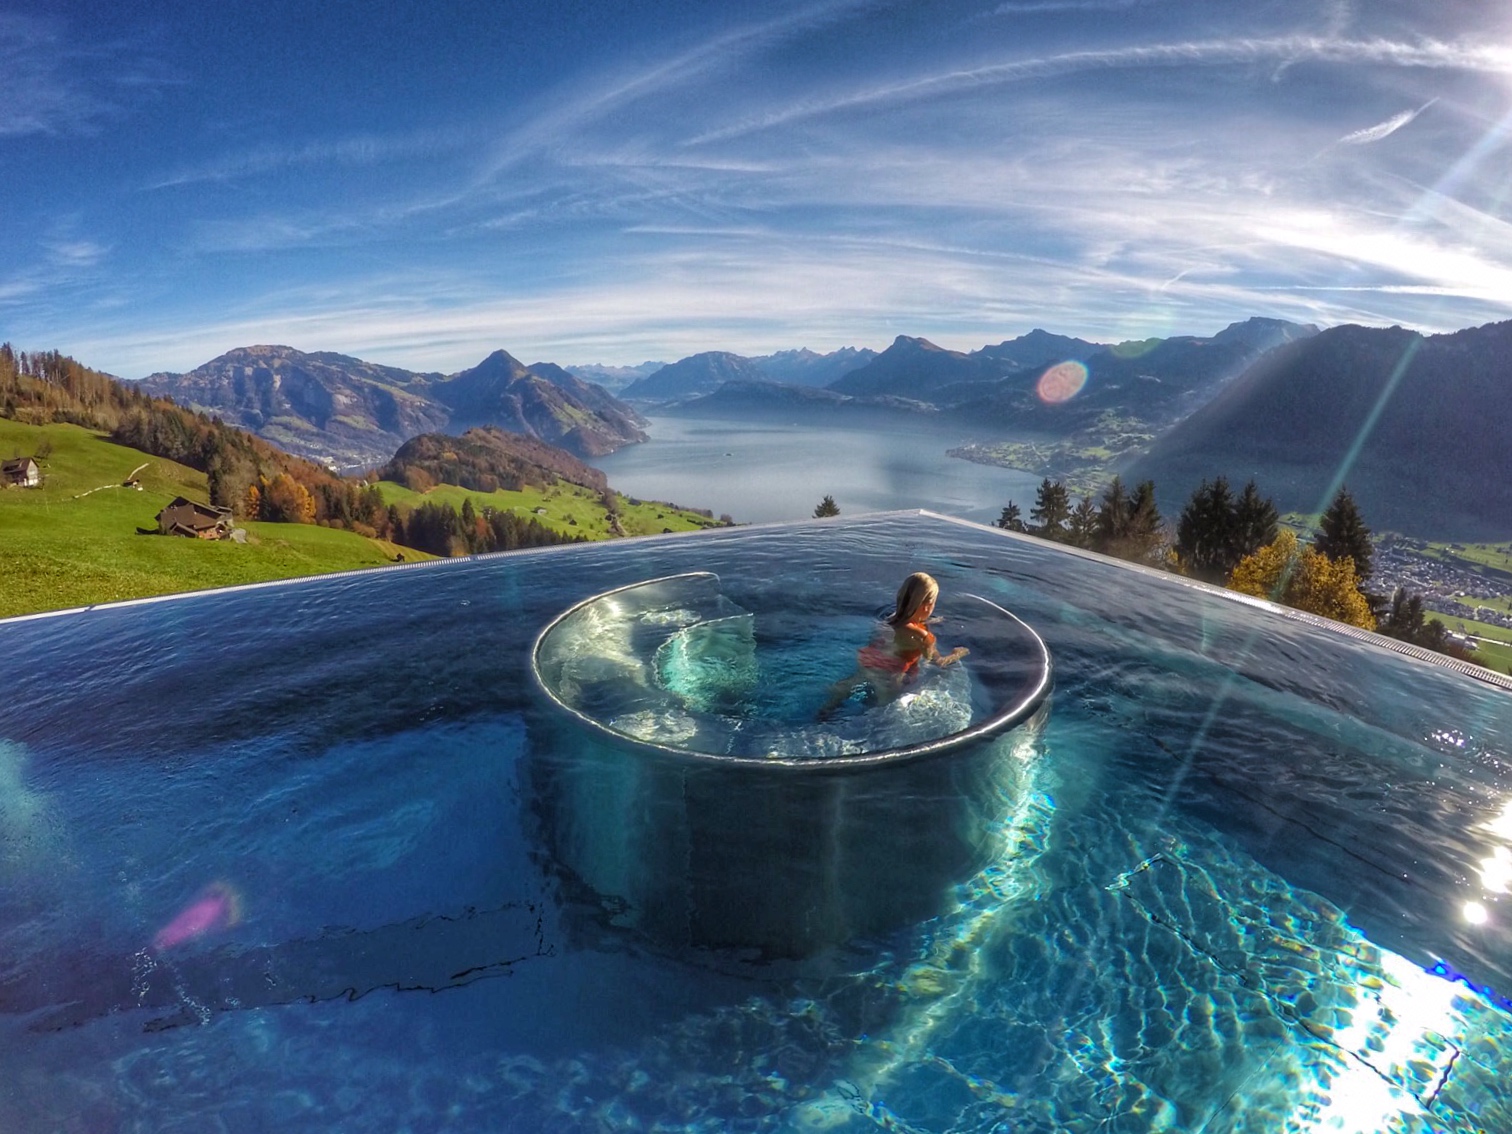 Piscina do hotel Villa Honegg com vista para os Alpes Suíços e para o Lago Lucerna | foto: Lala Rebelo